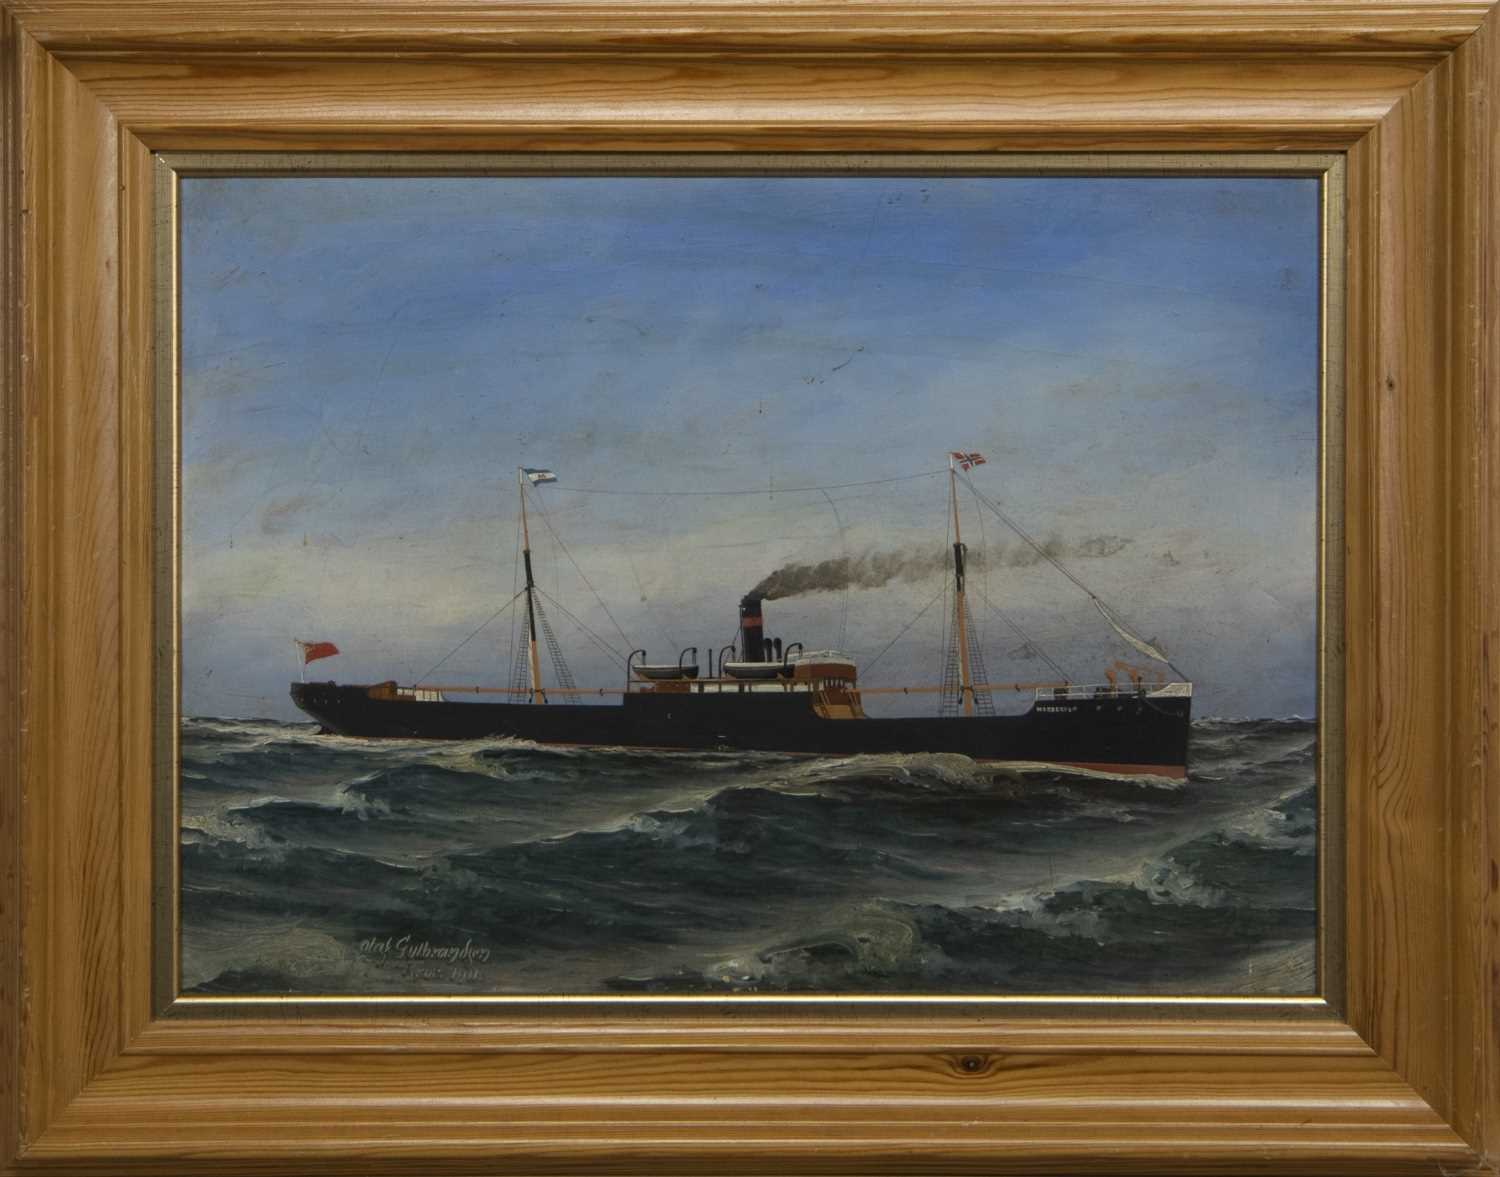 Lot 54 - SHIP AT SEA, AN OIL BY OLAF GULBRANDSEN